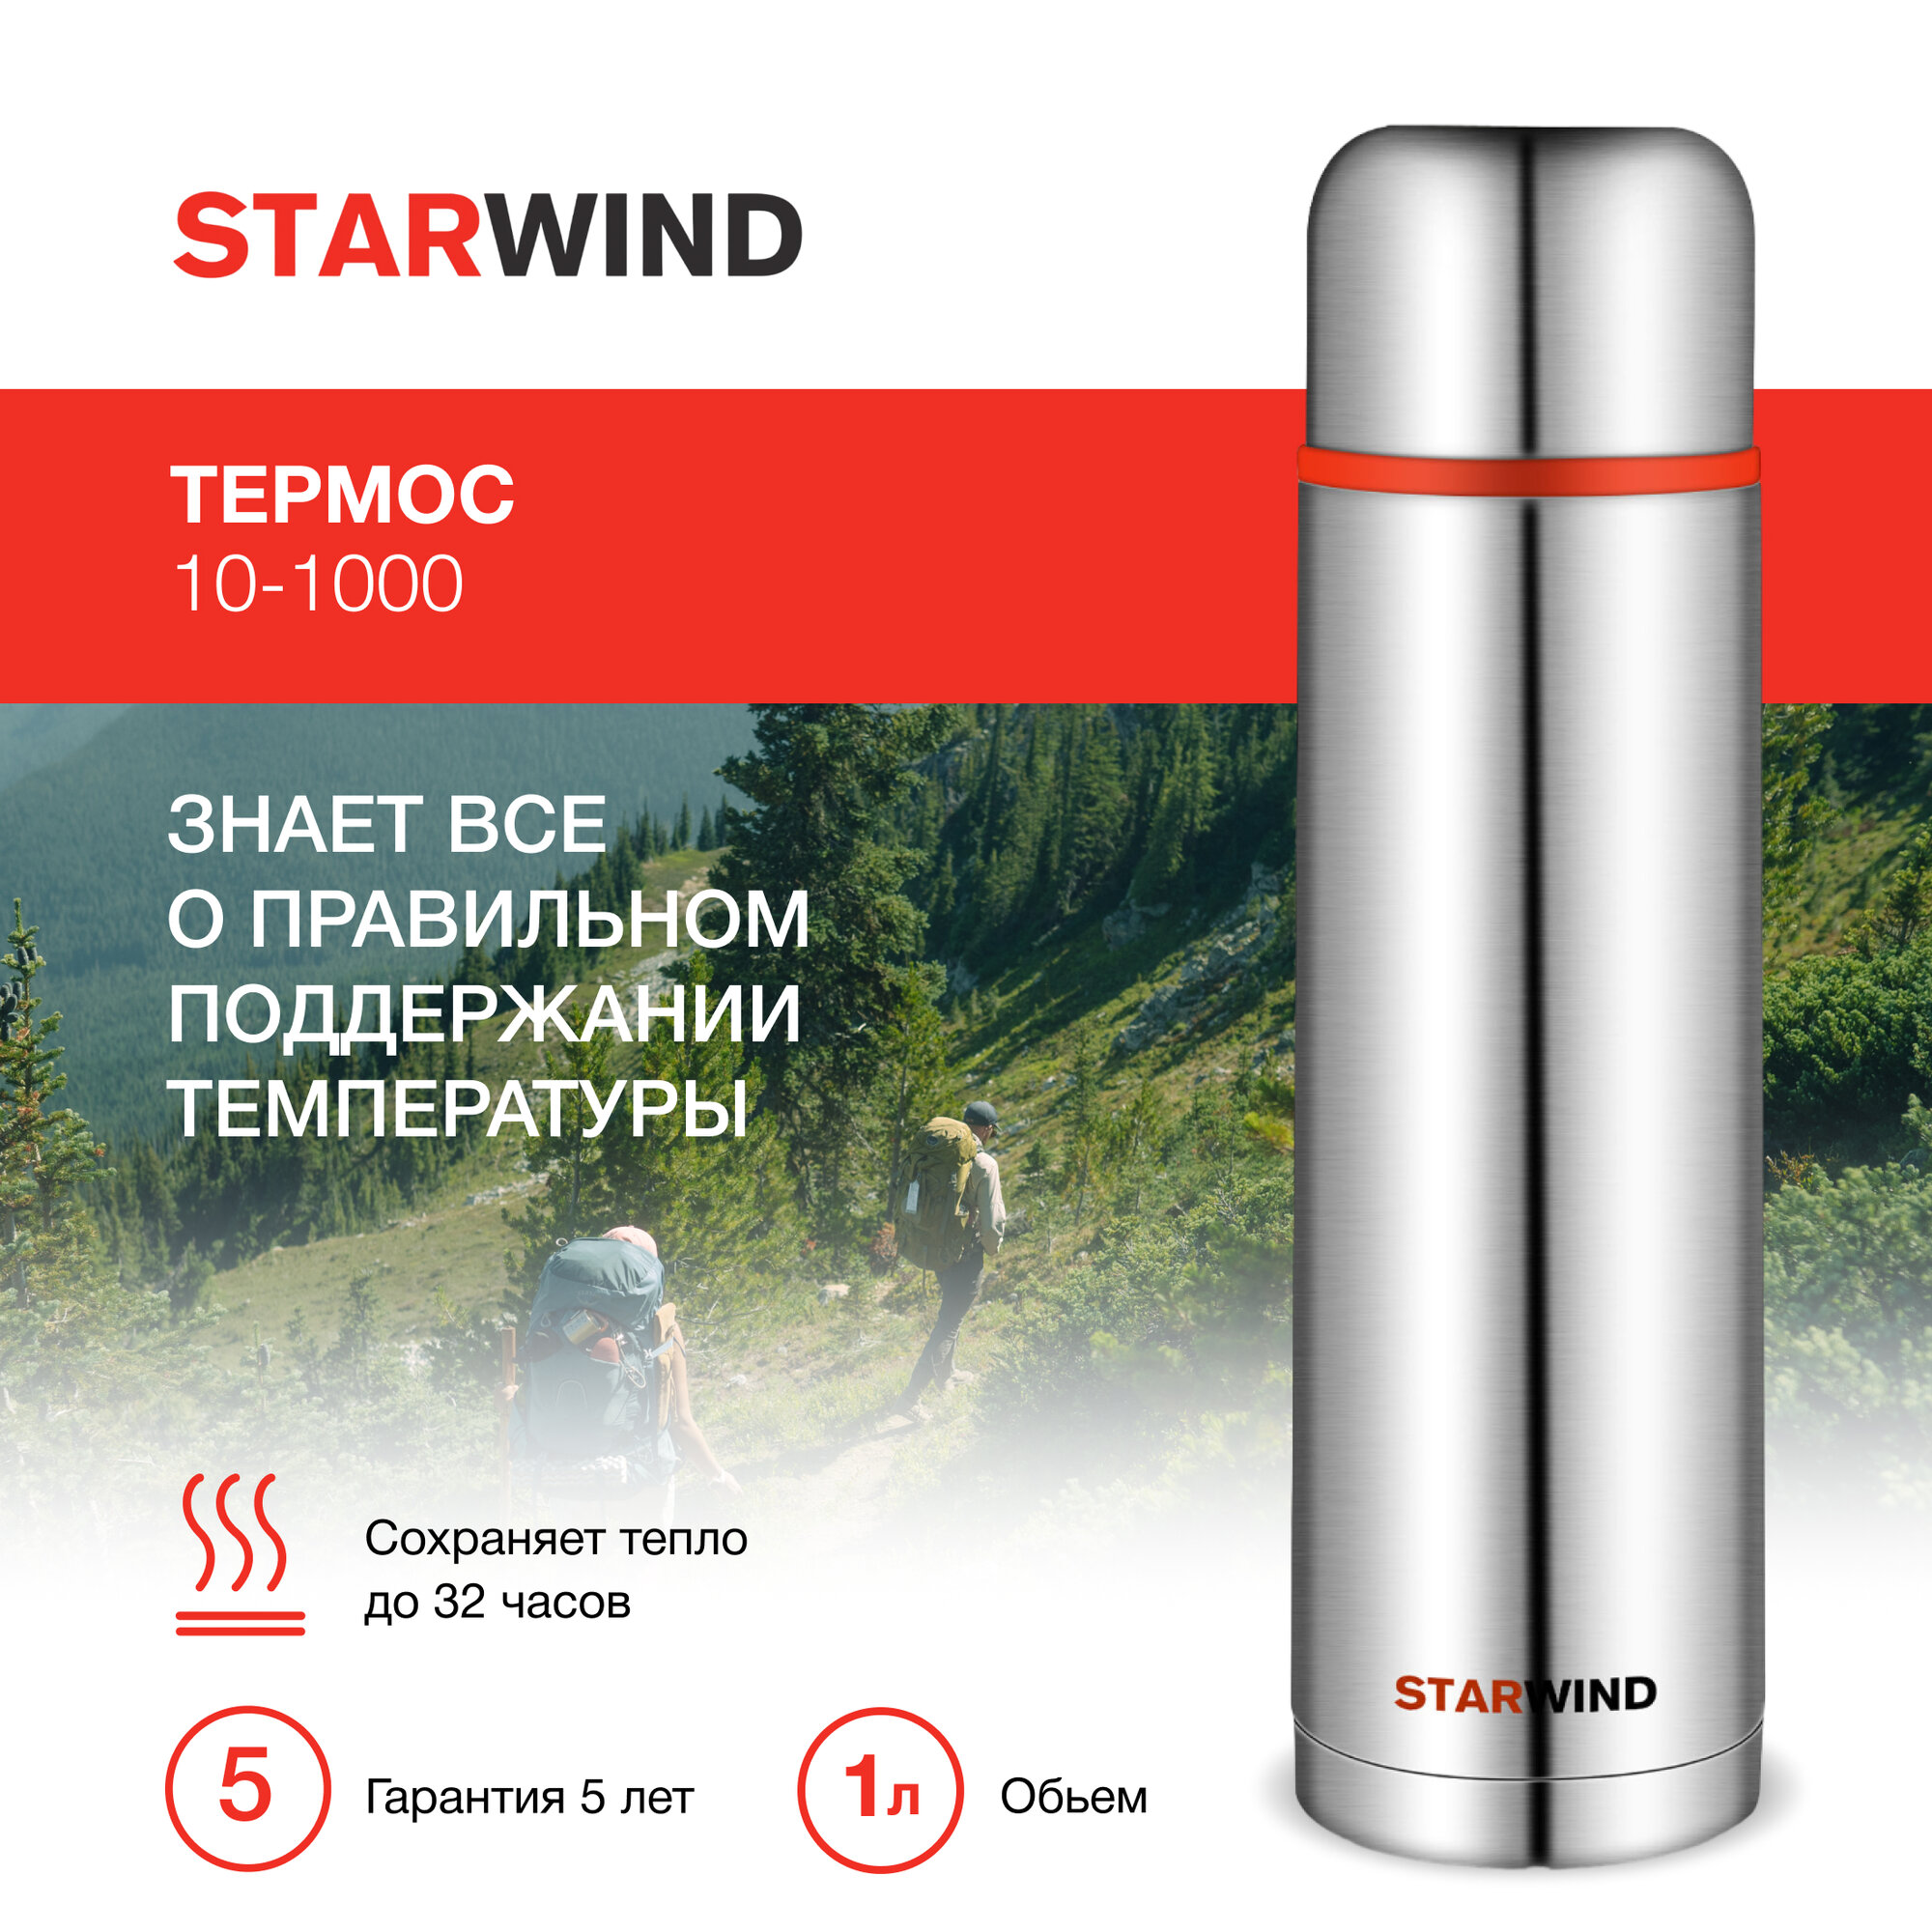 Термос Starwind 10-1000, 1л, серебристый/красный